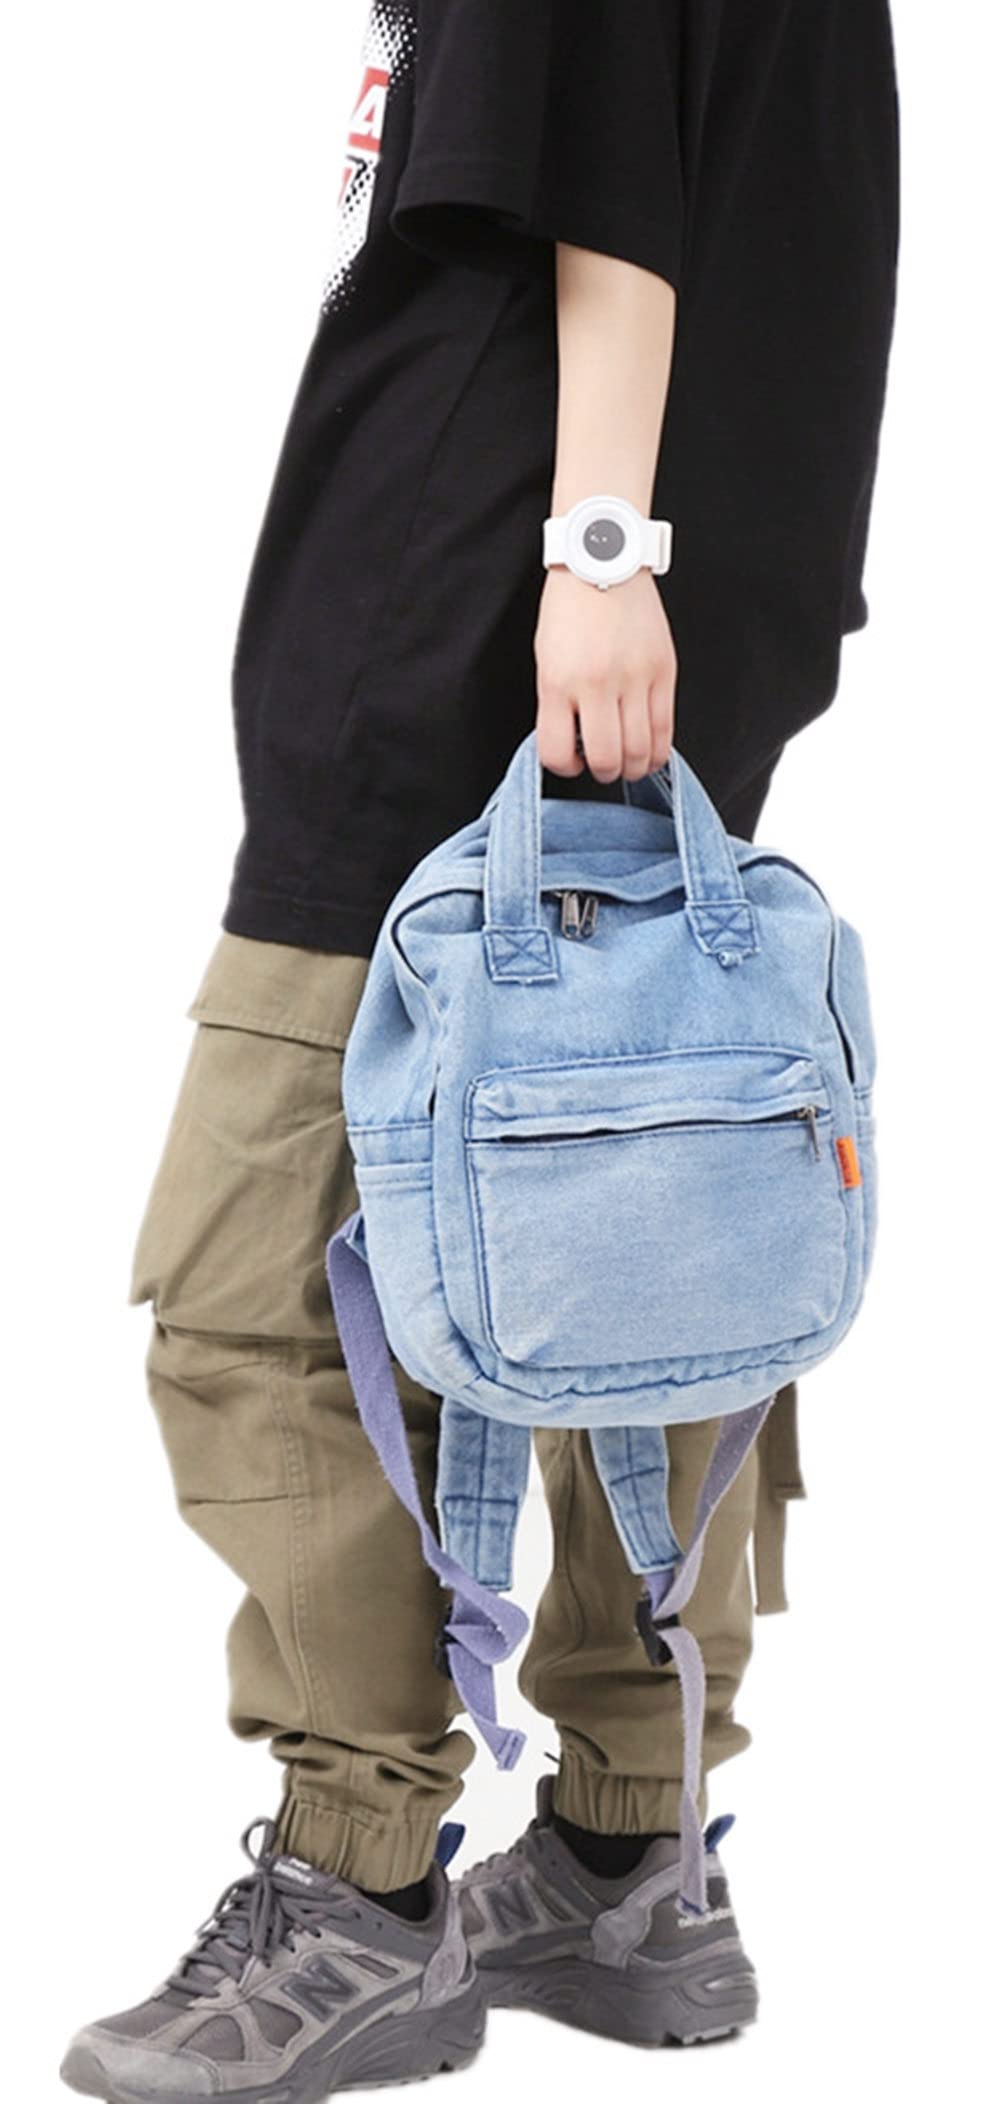 MaxxCloud Vintage Denim Rucksack Mini Jeans Backpack Satchel Hiking Daypack Travel Bag Small Handbag Purse (585)